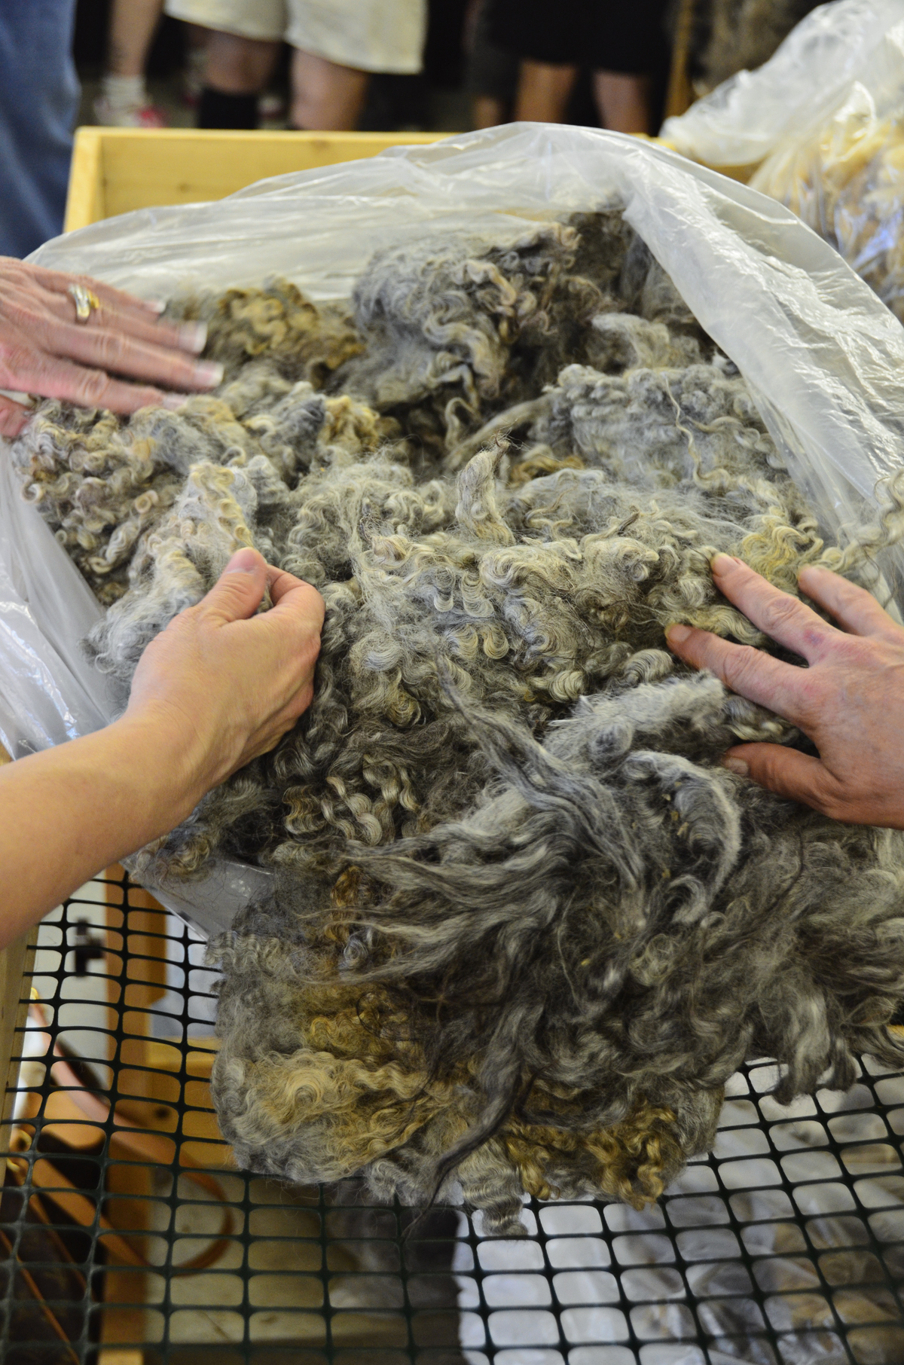 Washed Wool, Raw Wool White, Washed Fleece, Sheep Wool, Raw Wool